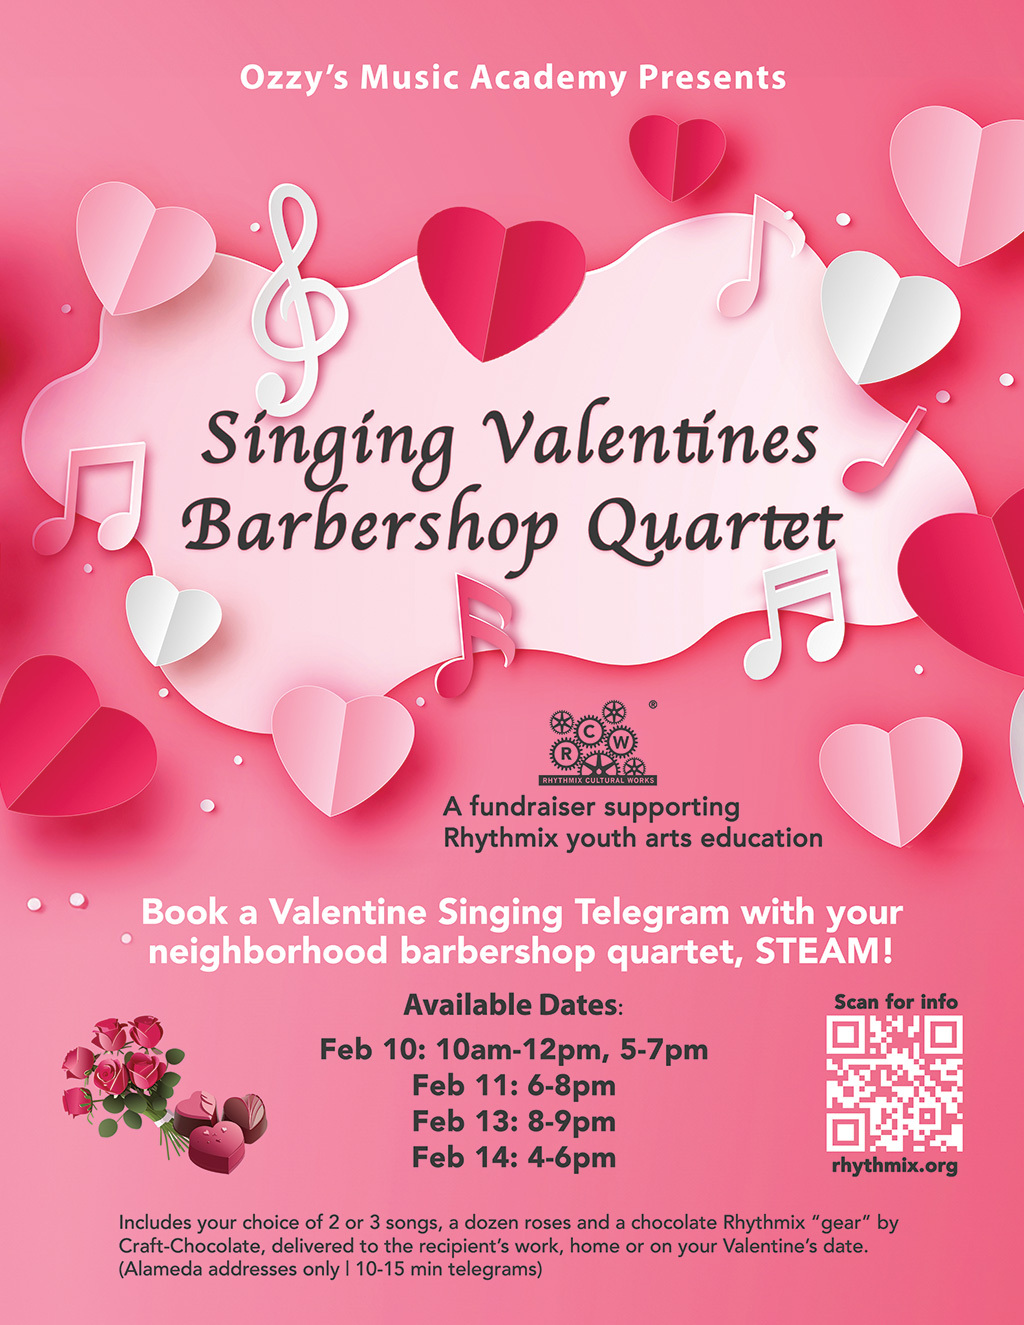 Rhythmix Cultural Works Ozzy s Music Academy Presents Singing Valentines promotion flier on Digifli com